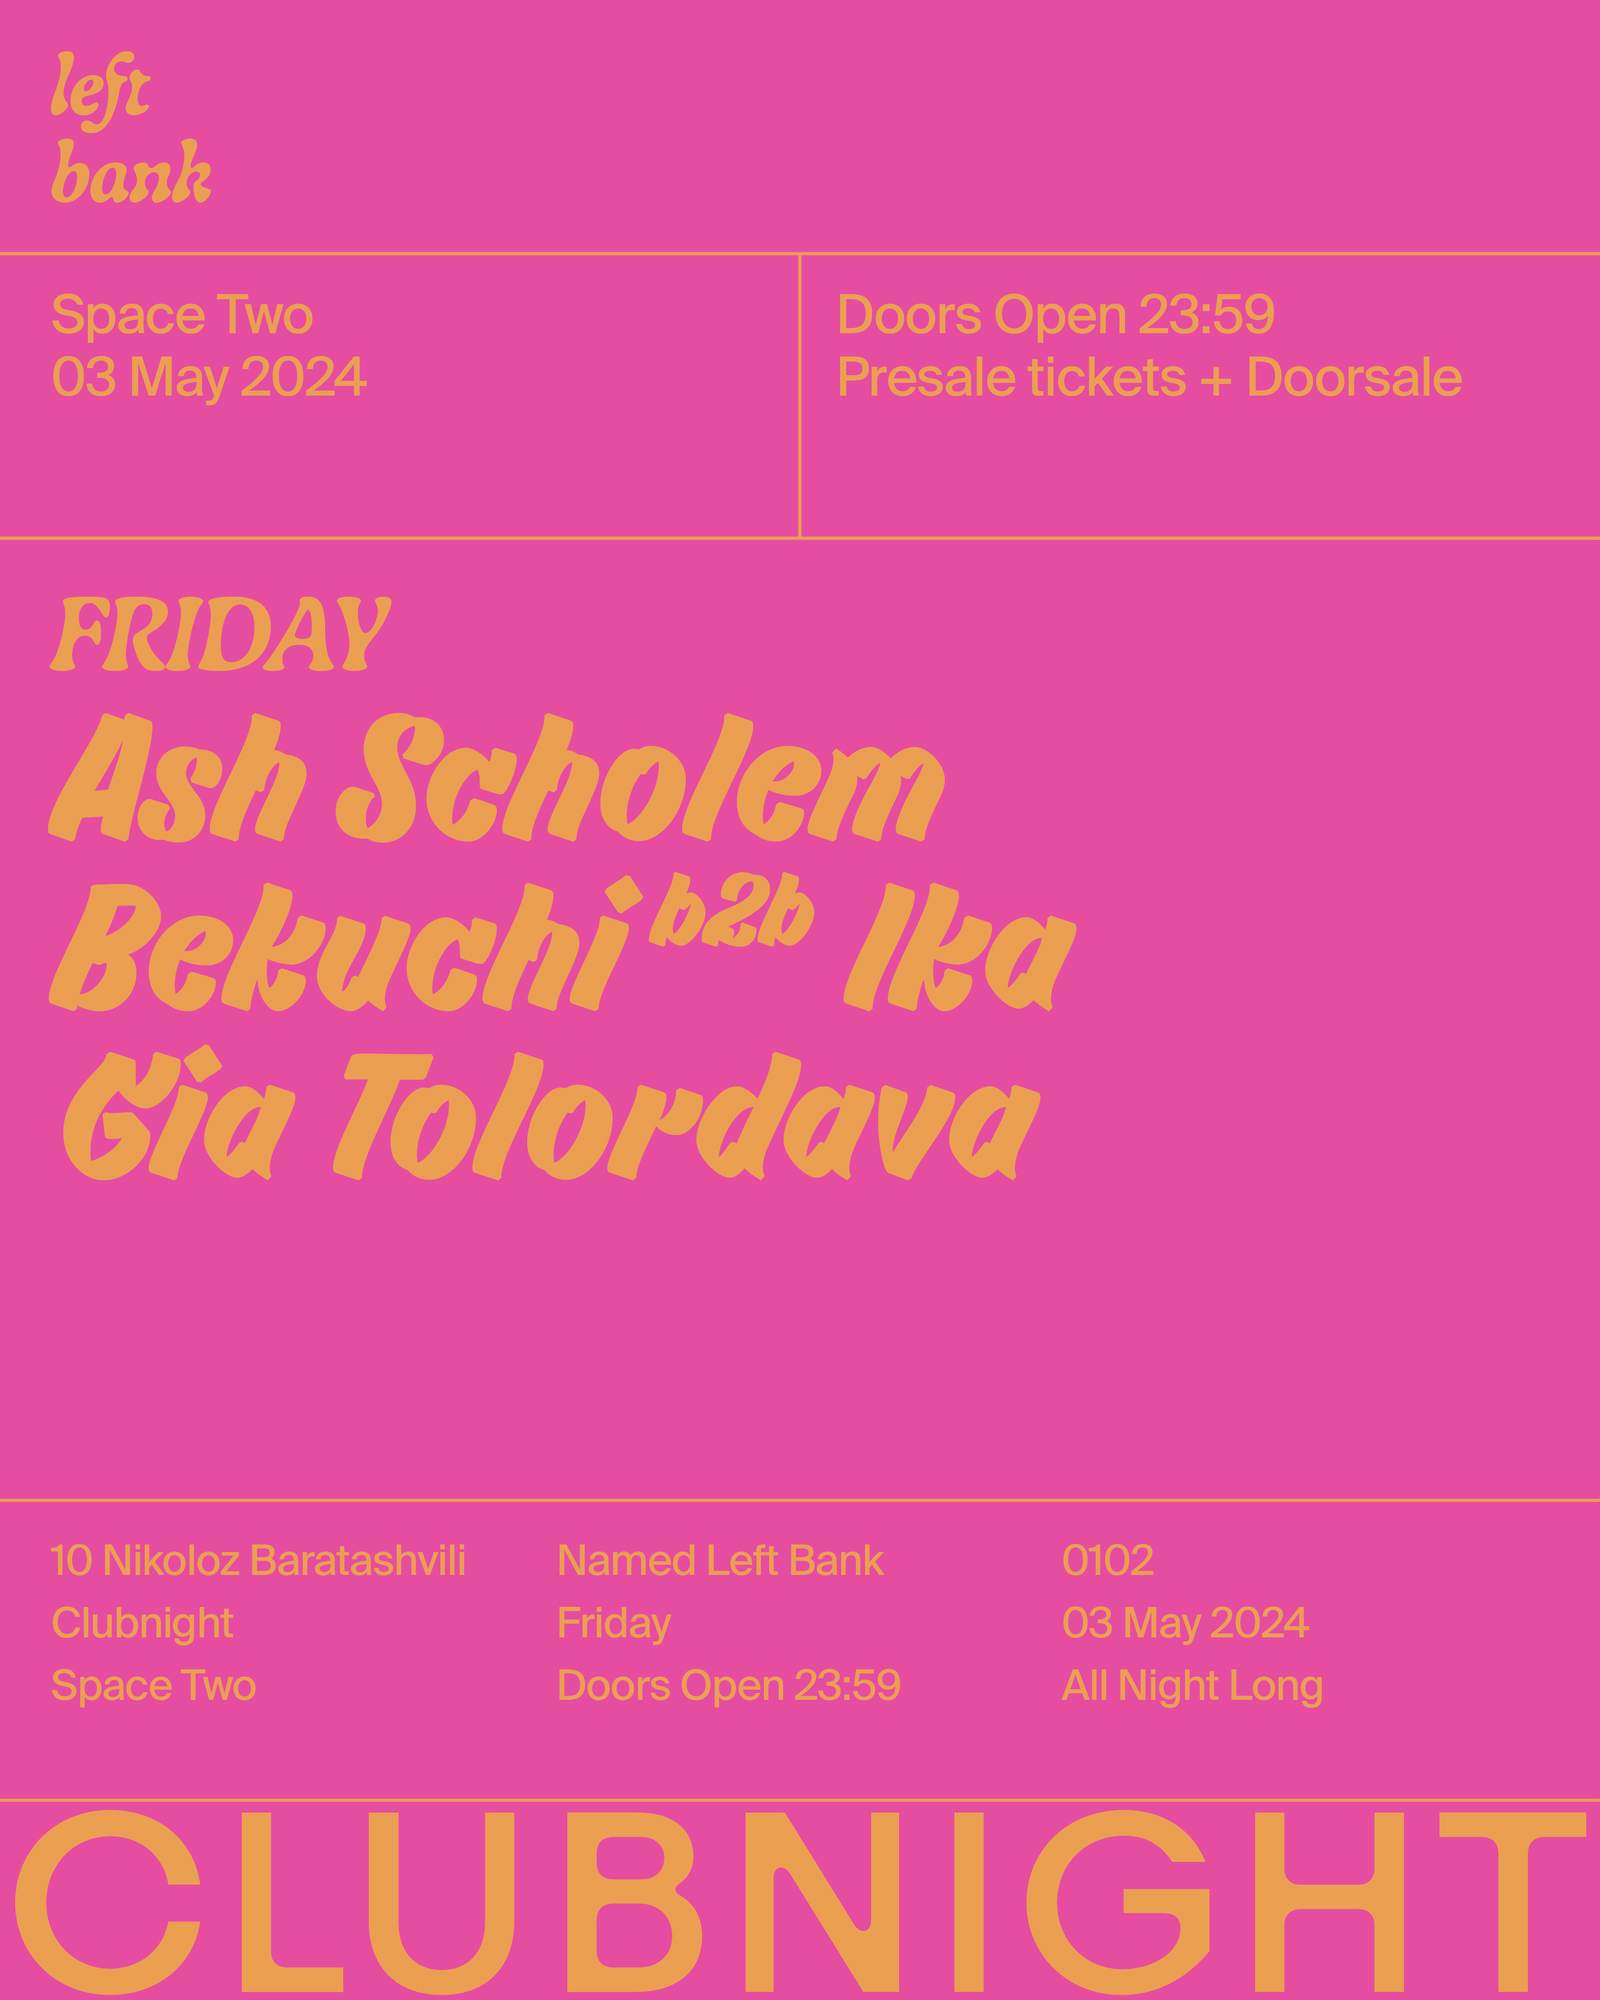 Left Bank Clubnight: Gia Tolordava • Ash Scholem • Bekuchi b2b Ika - フライヤー表